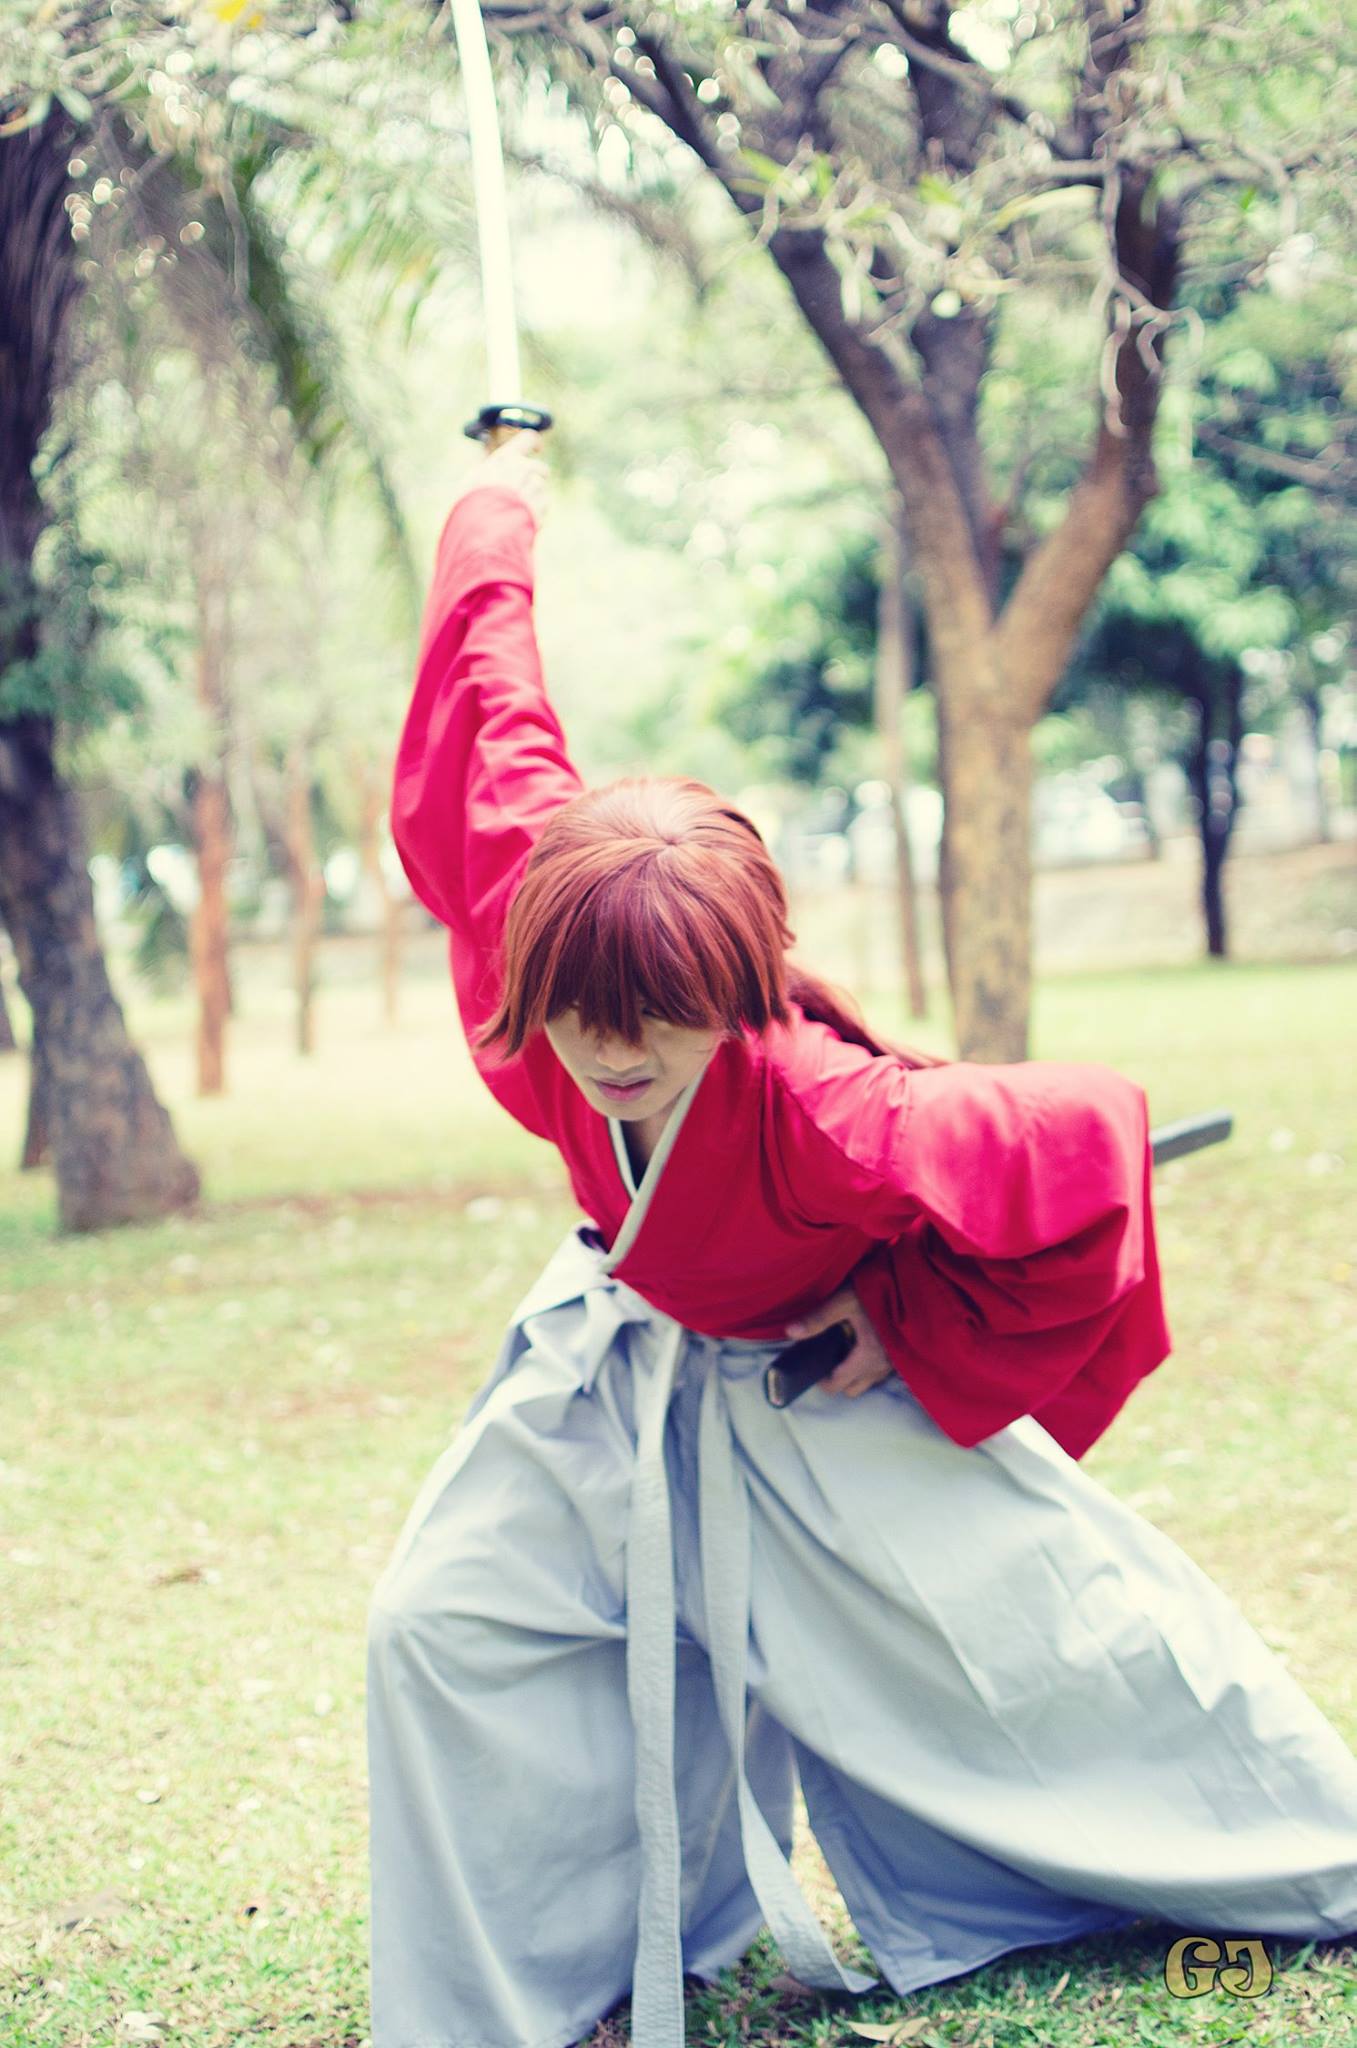 Kenshin Himura Cosplay by rezhawa on DeviantArt